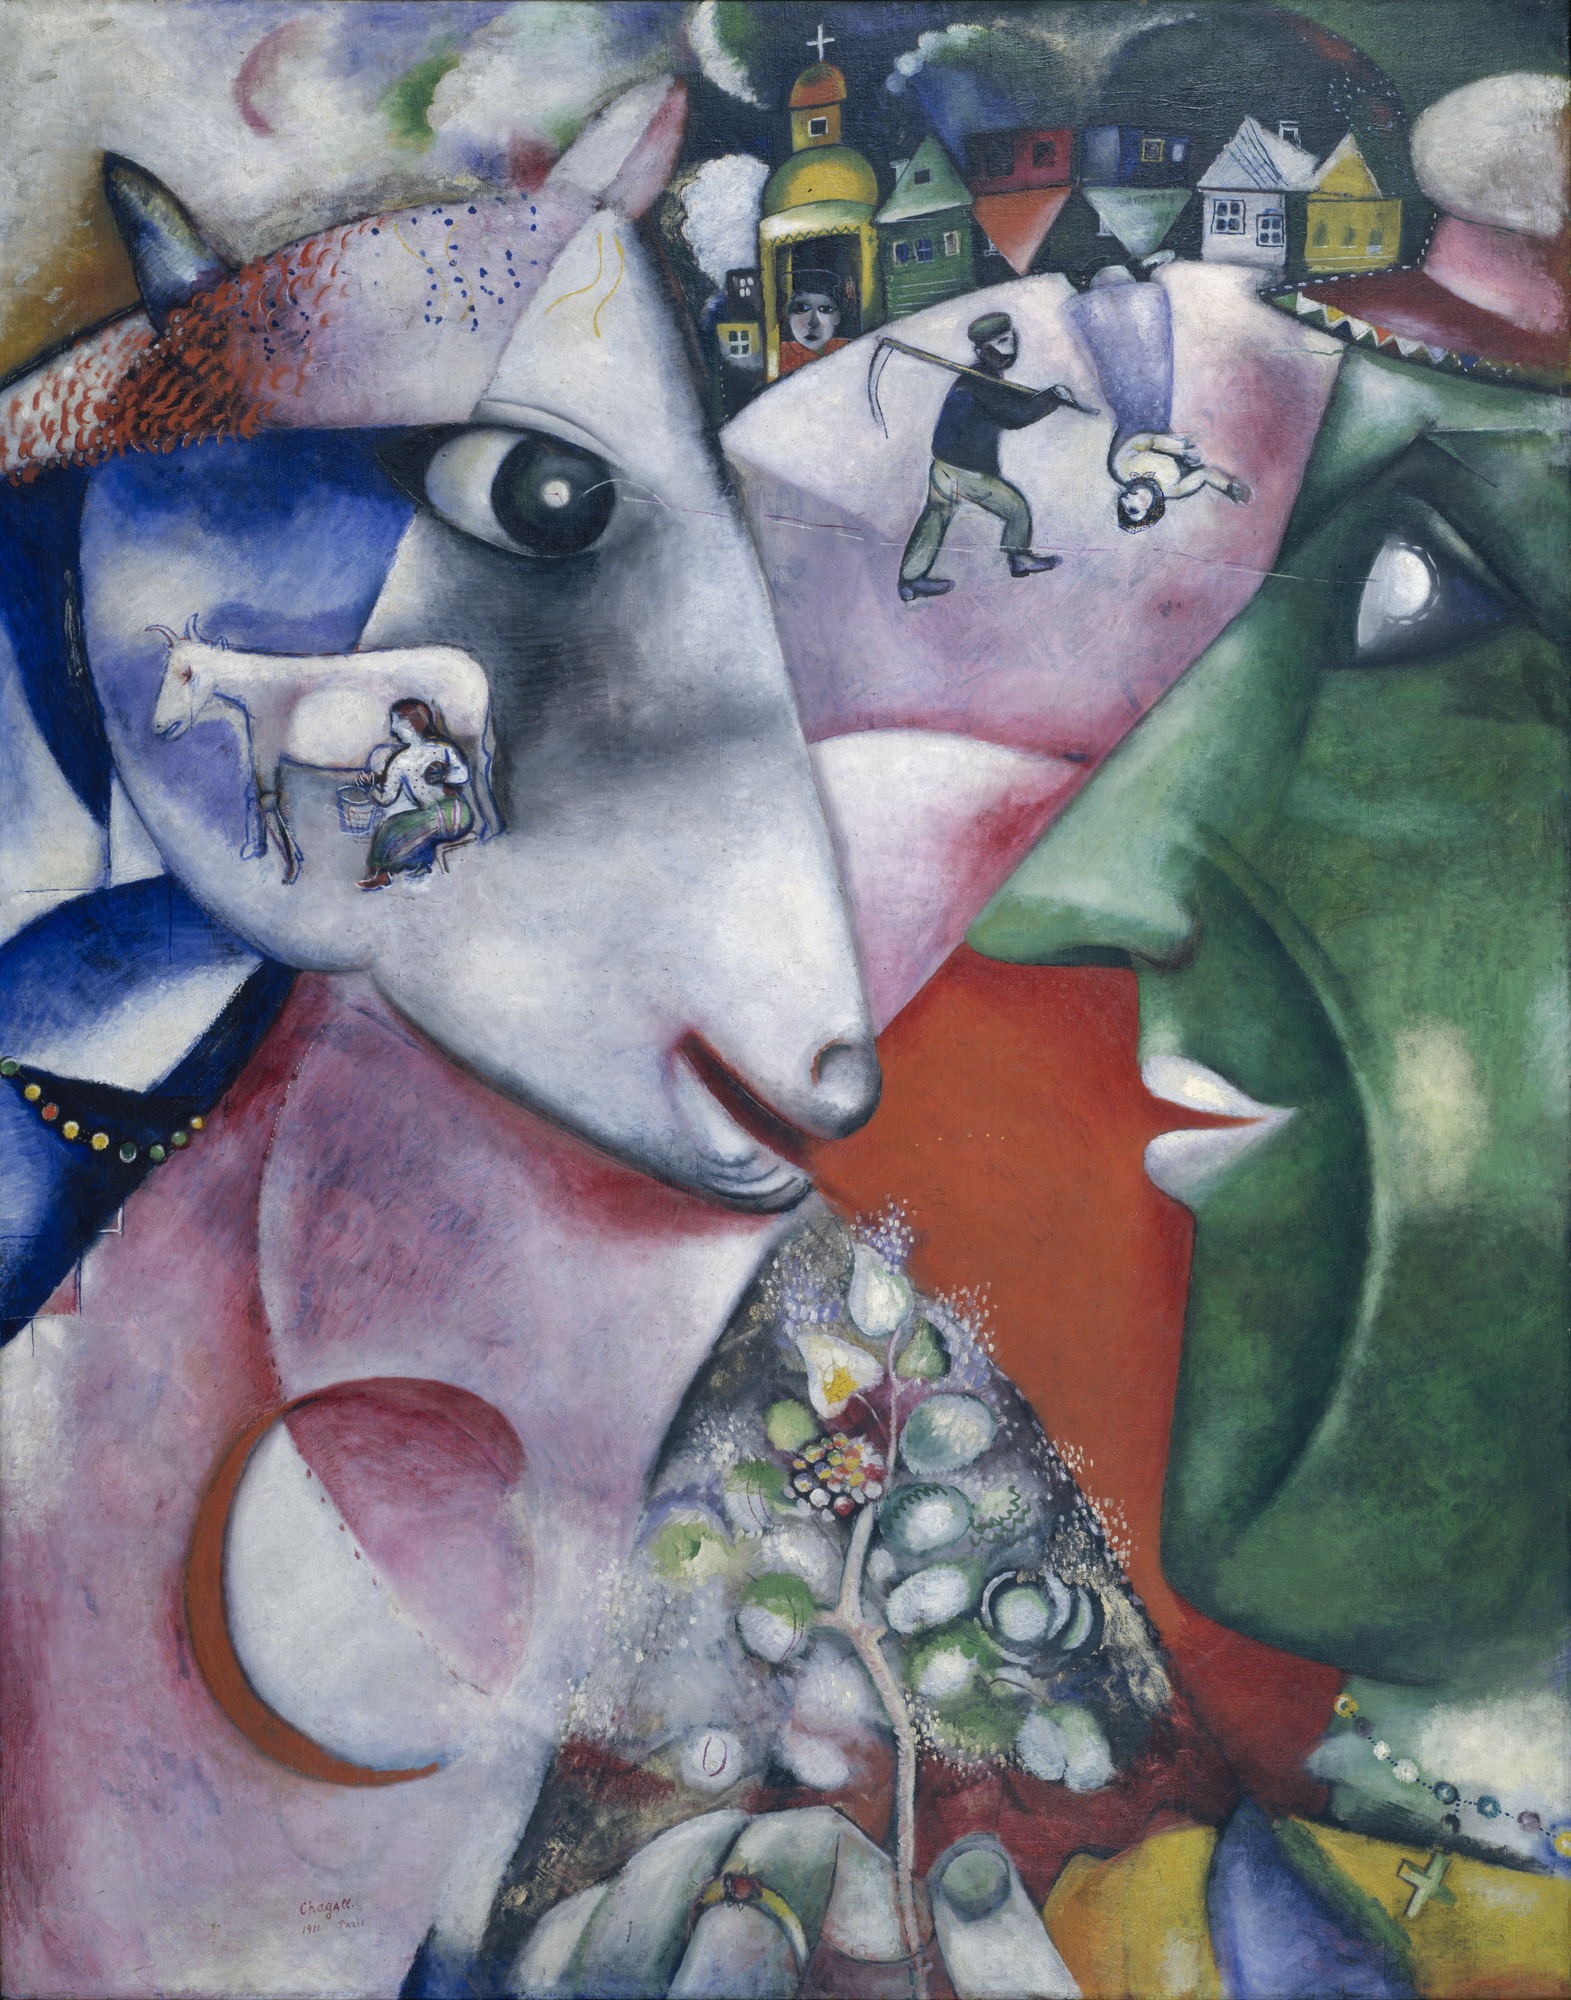 Ik en het dorp by Marc Chagall - 1911 - 191 x 150.5 cm 